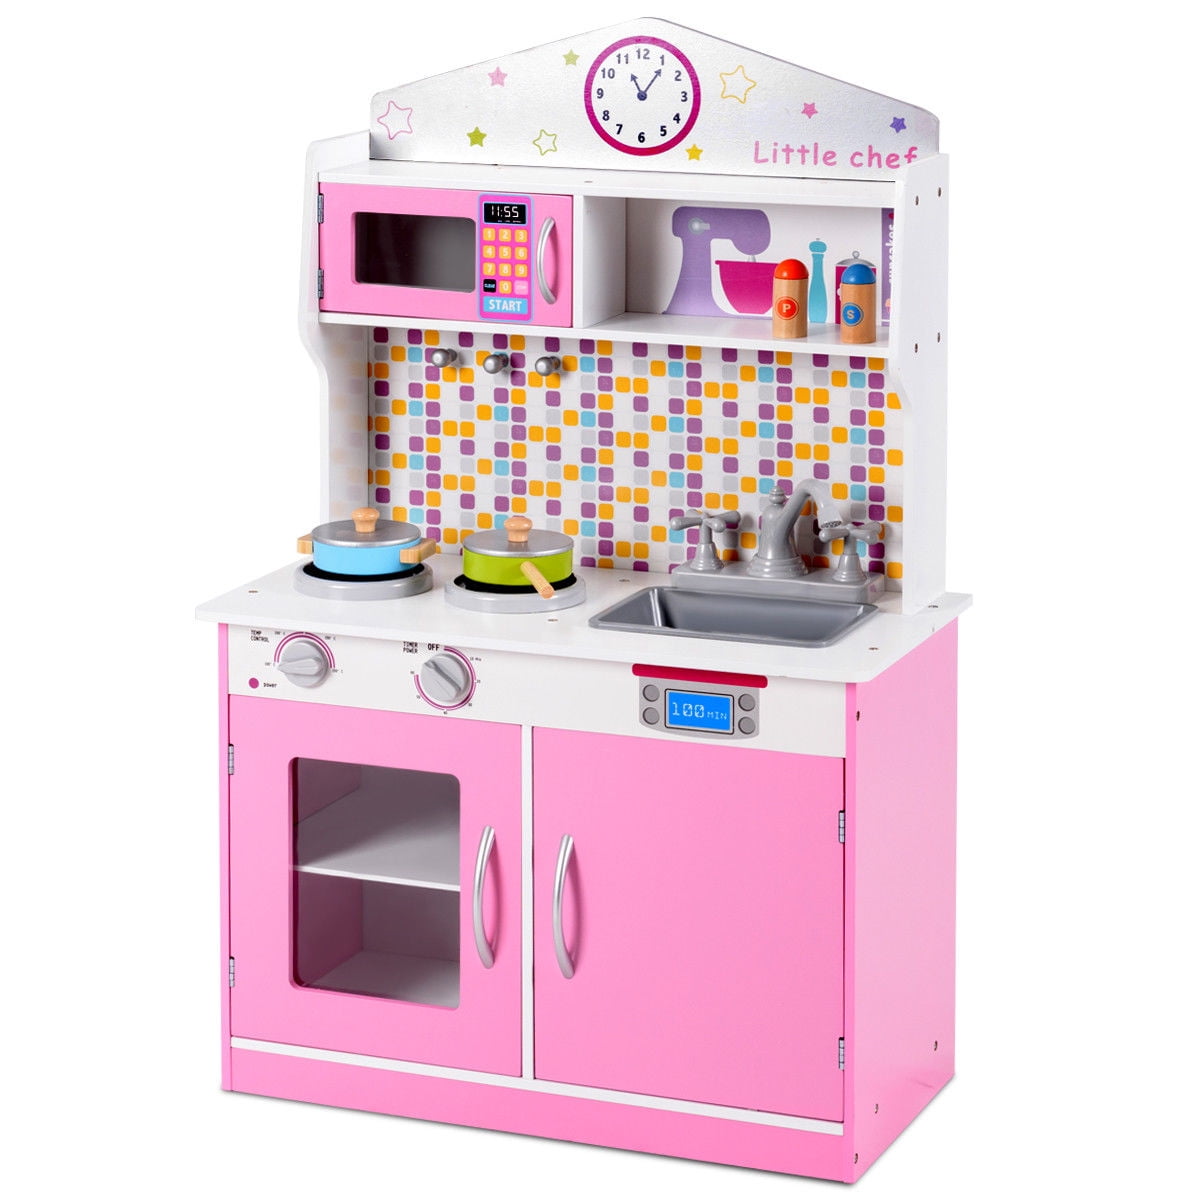 Cooking Pretend Play Set Kitchen Toy  Kids Toddler Playset Toy Gift Pink 